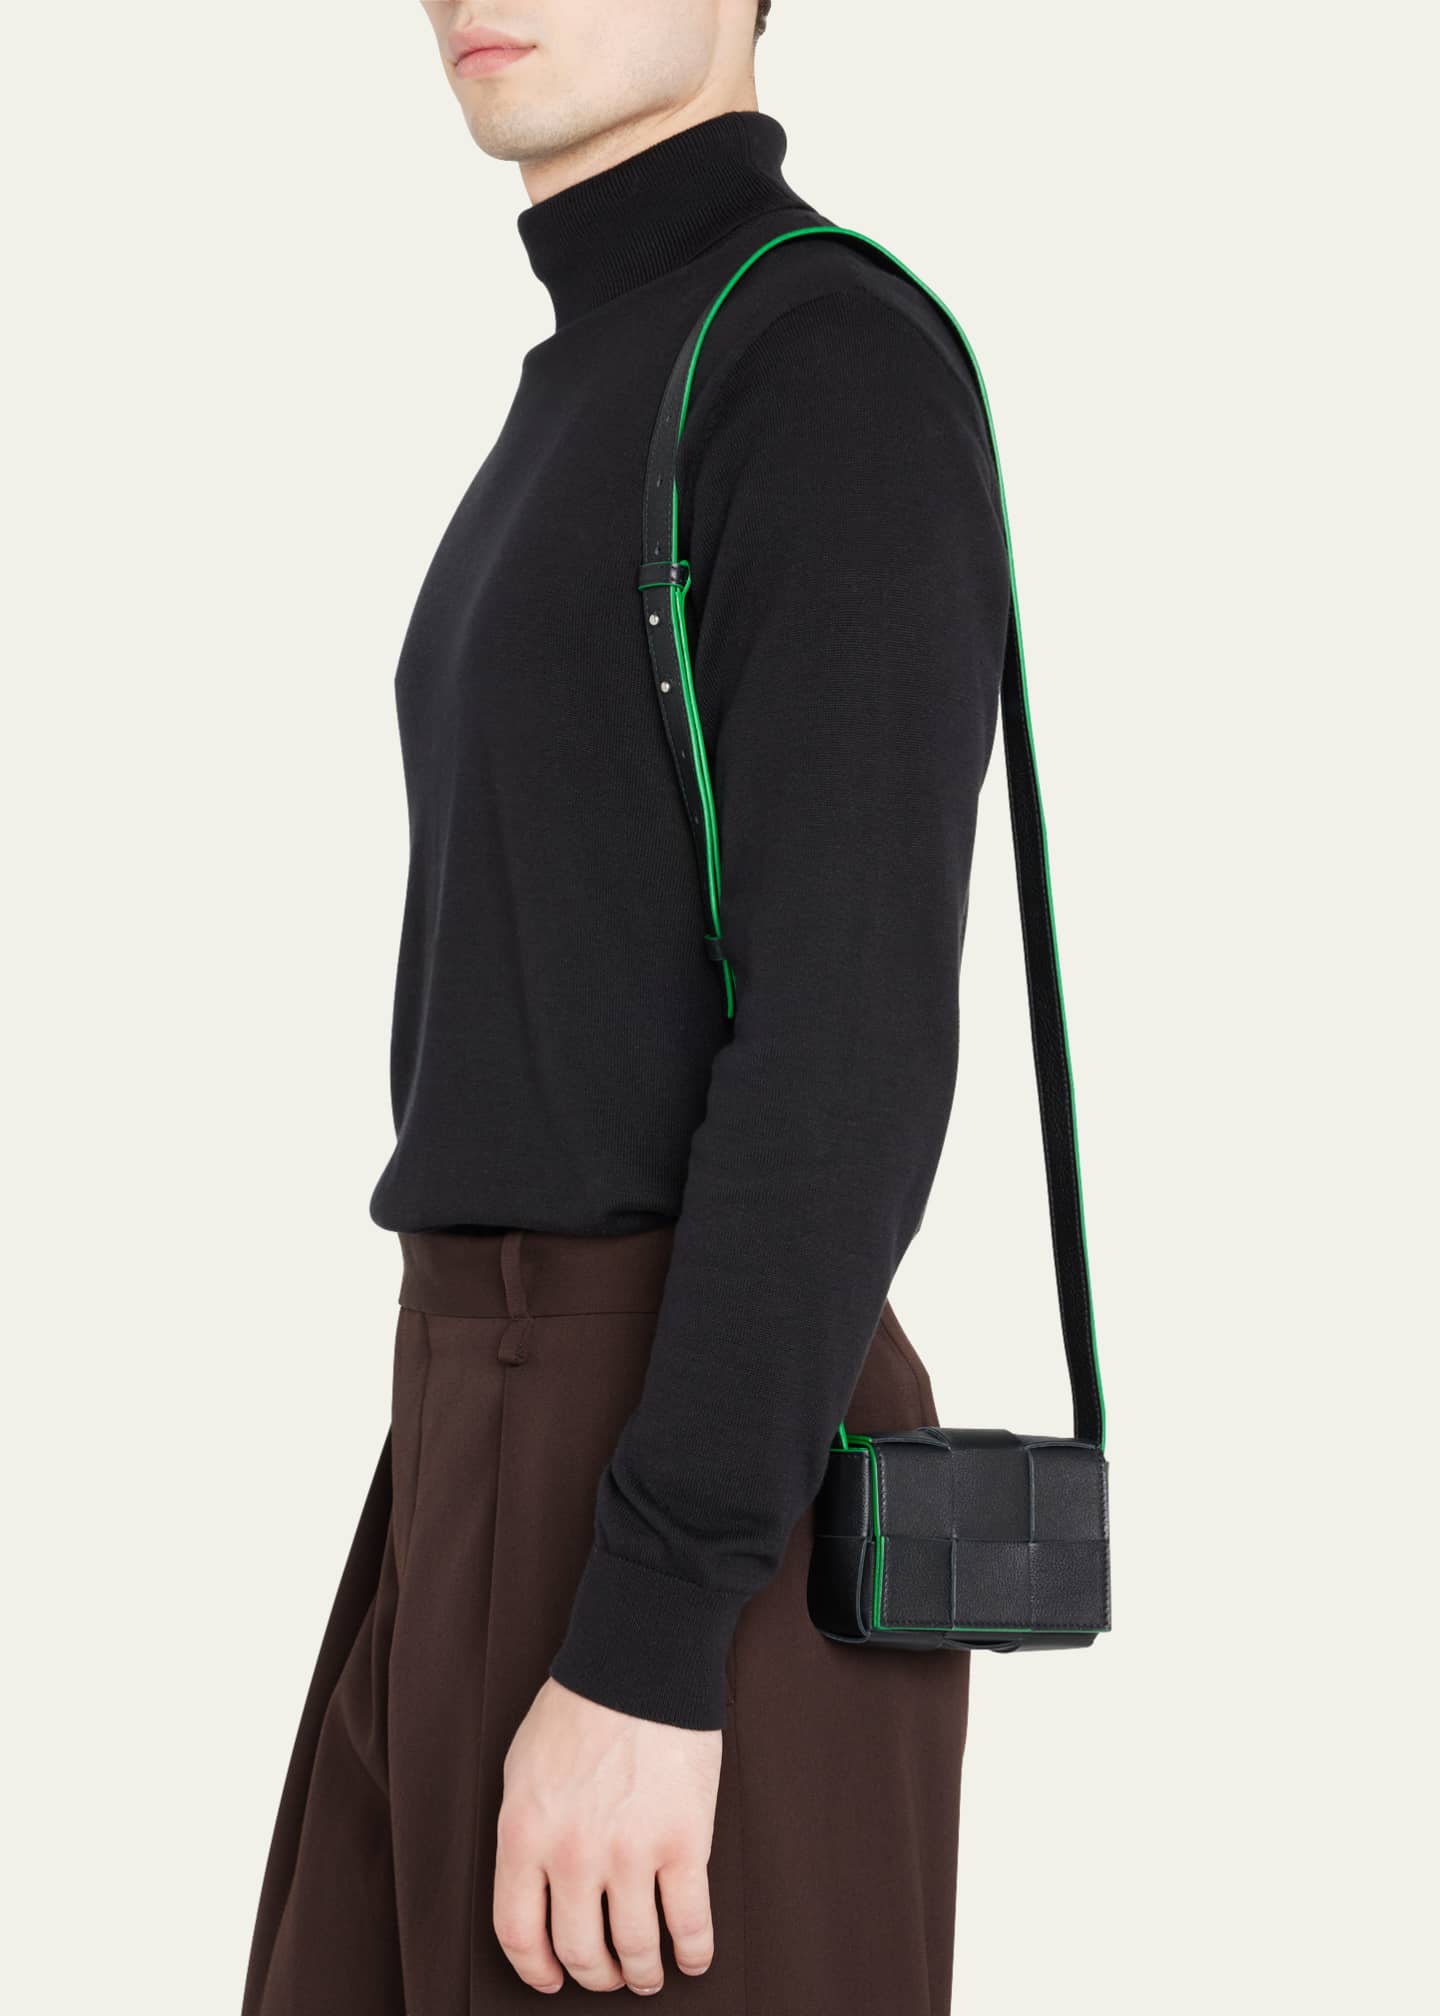 Bottega Veneta Mini Intrecciato Leather Crossbody Bag